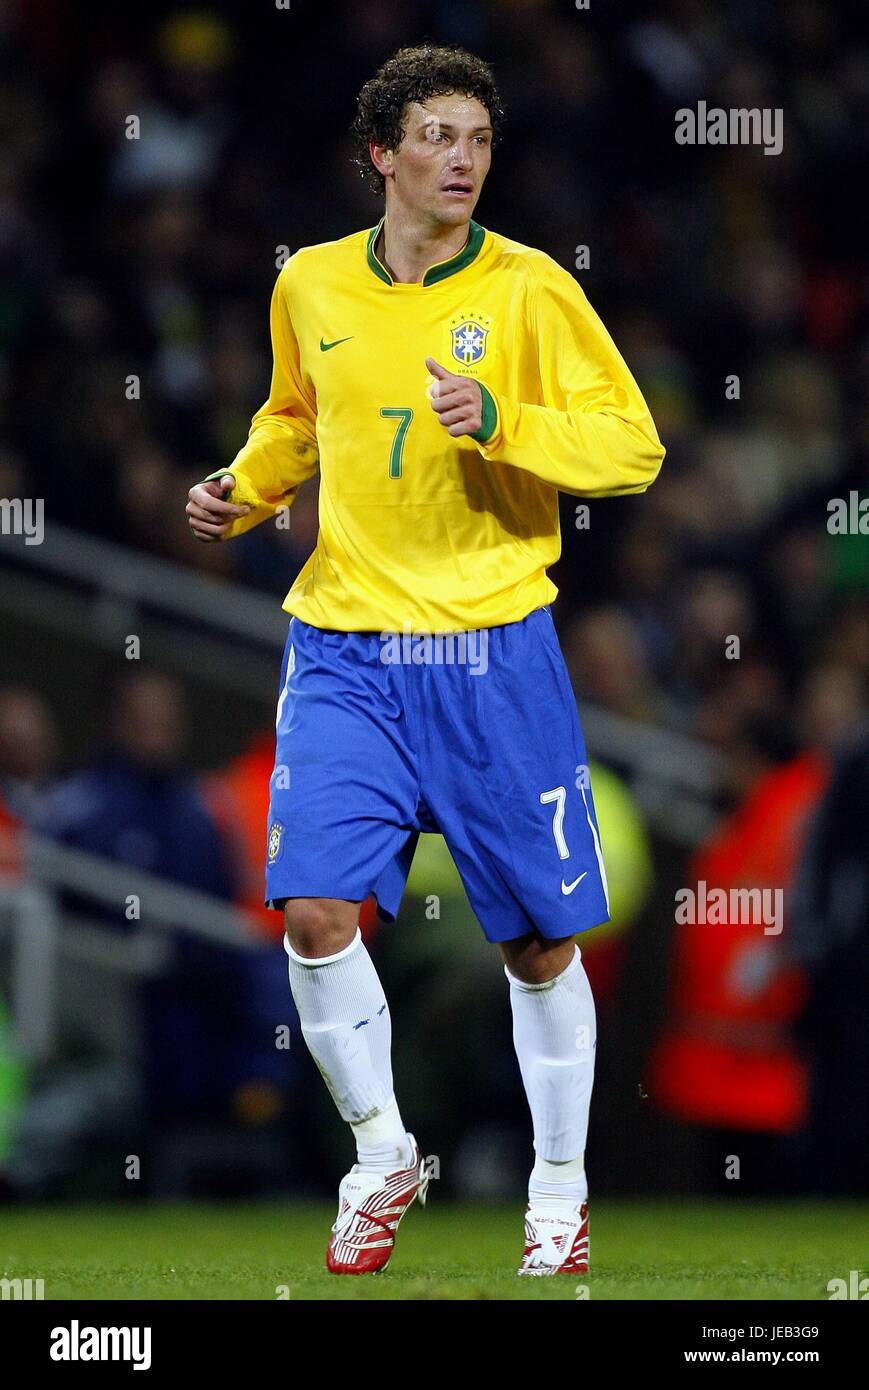 Brasil ELANO y el Shakhtar Donetsk del Emirates Stadium, el Arsenal de Londres, 06 de febrero de 2007 Foto de stock